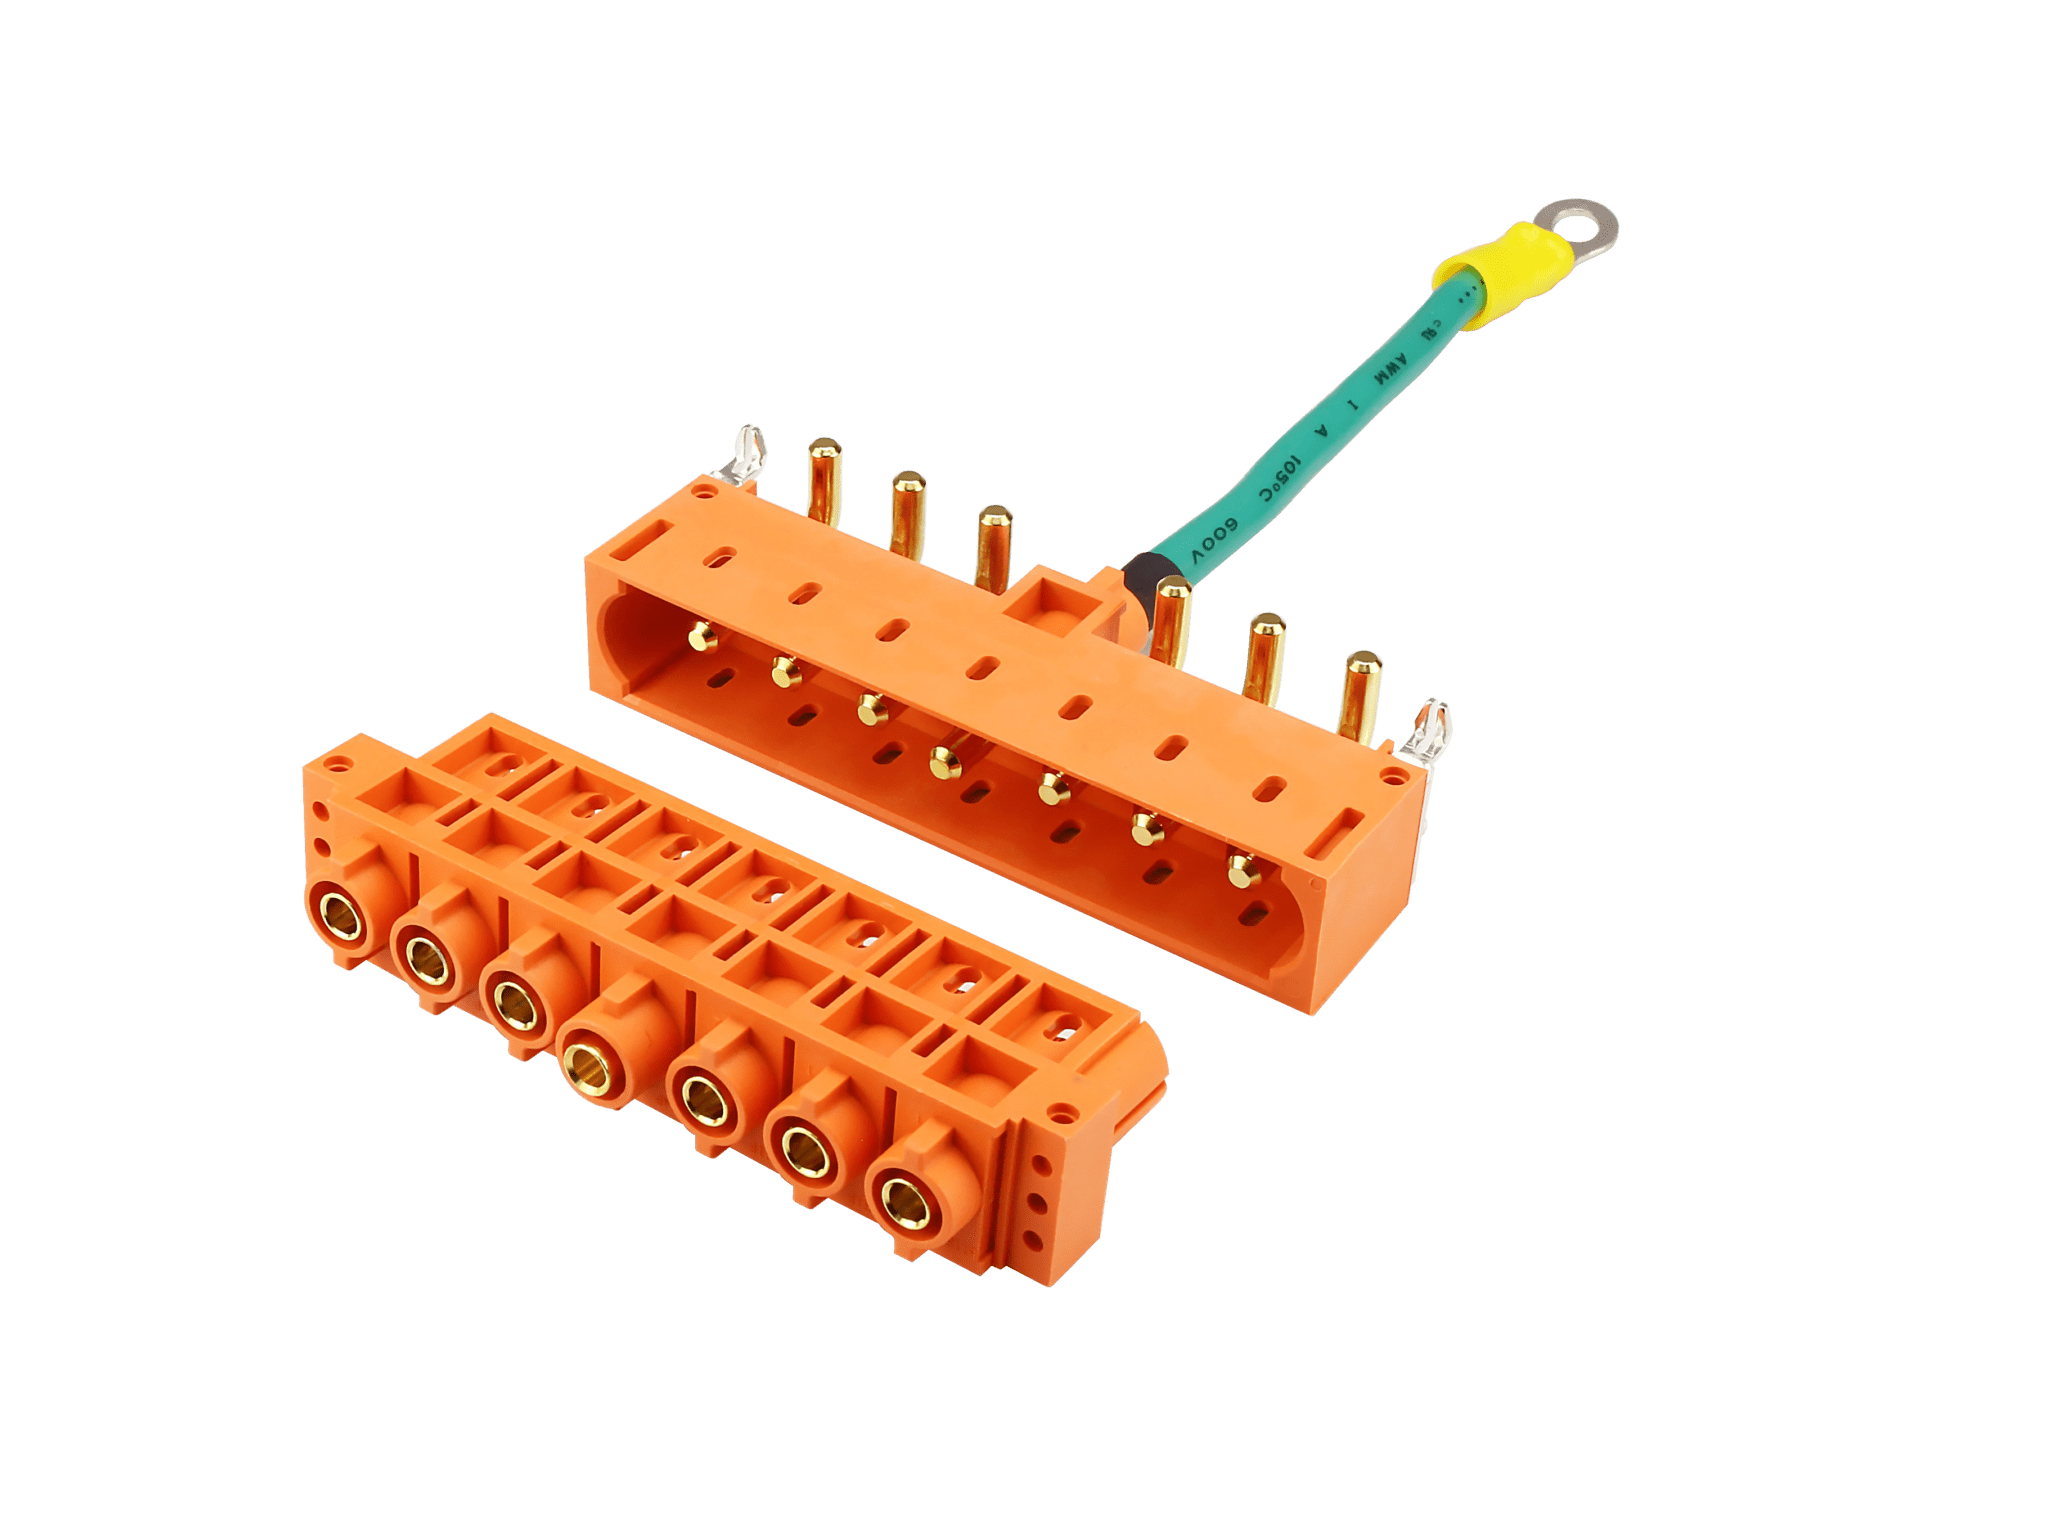 BizLink high-power connectors